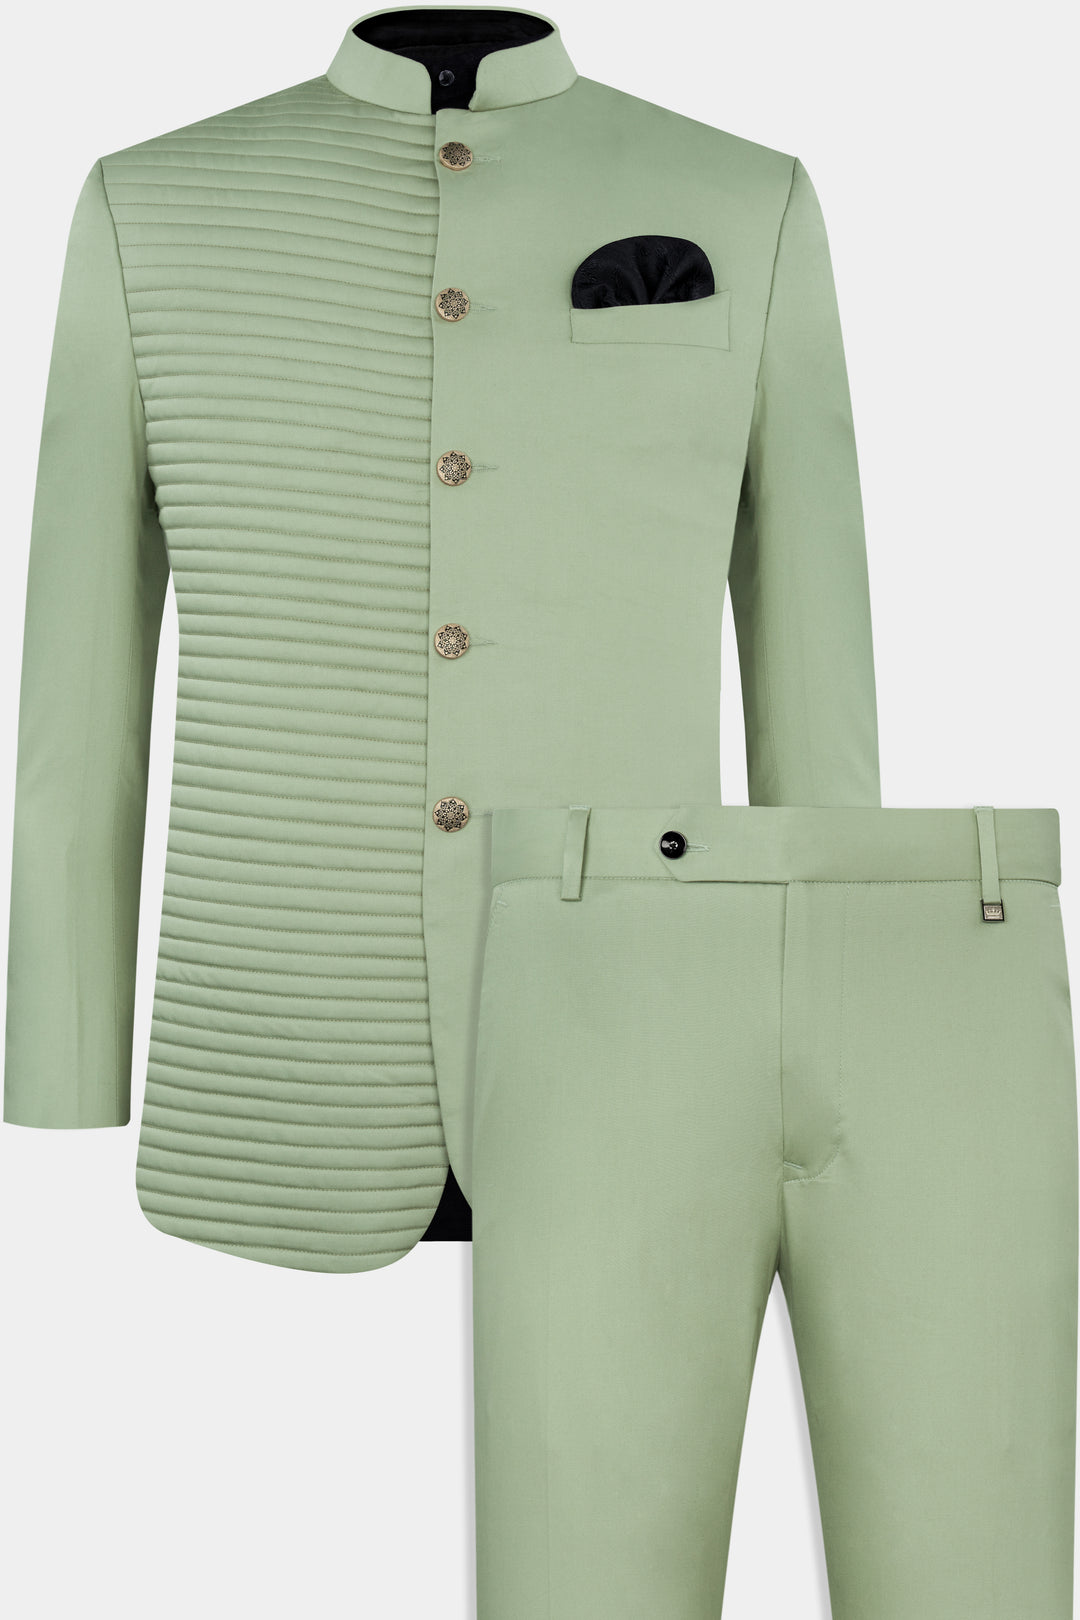 Olive Green Mandarin Suit